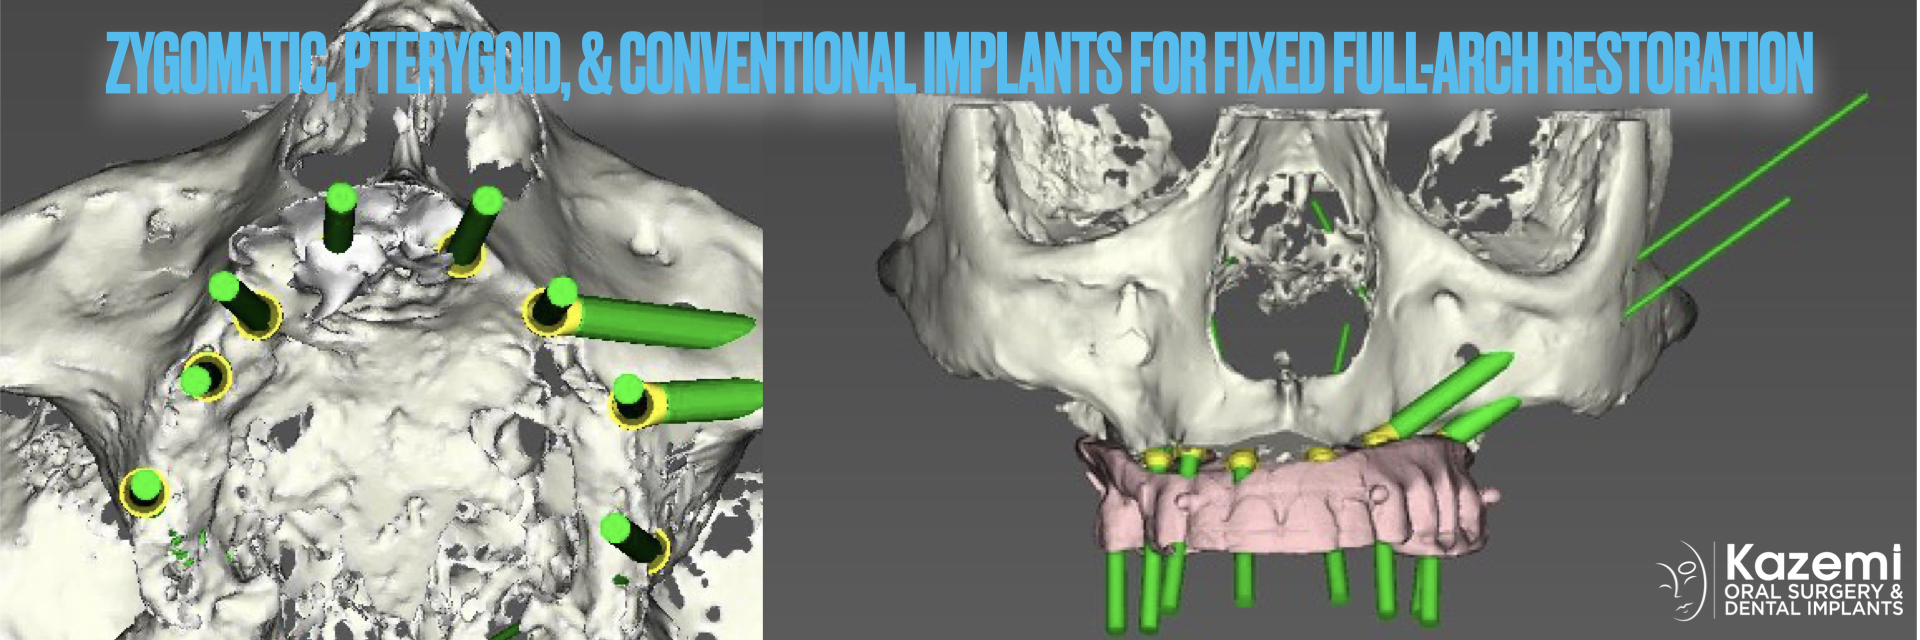 zygomatic-pterygoid-dental-implants-severe-bone-loss-kazemi-oral-surgery-3